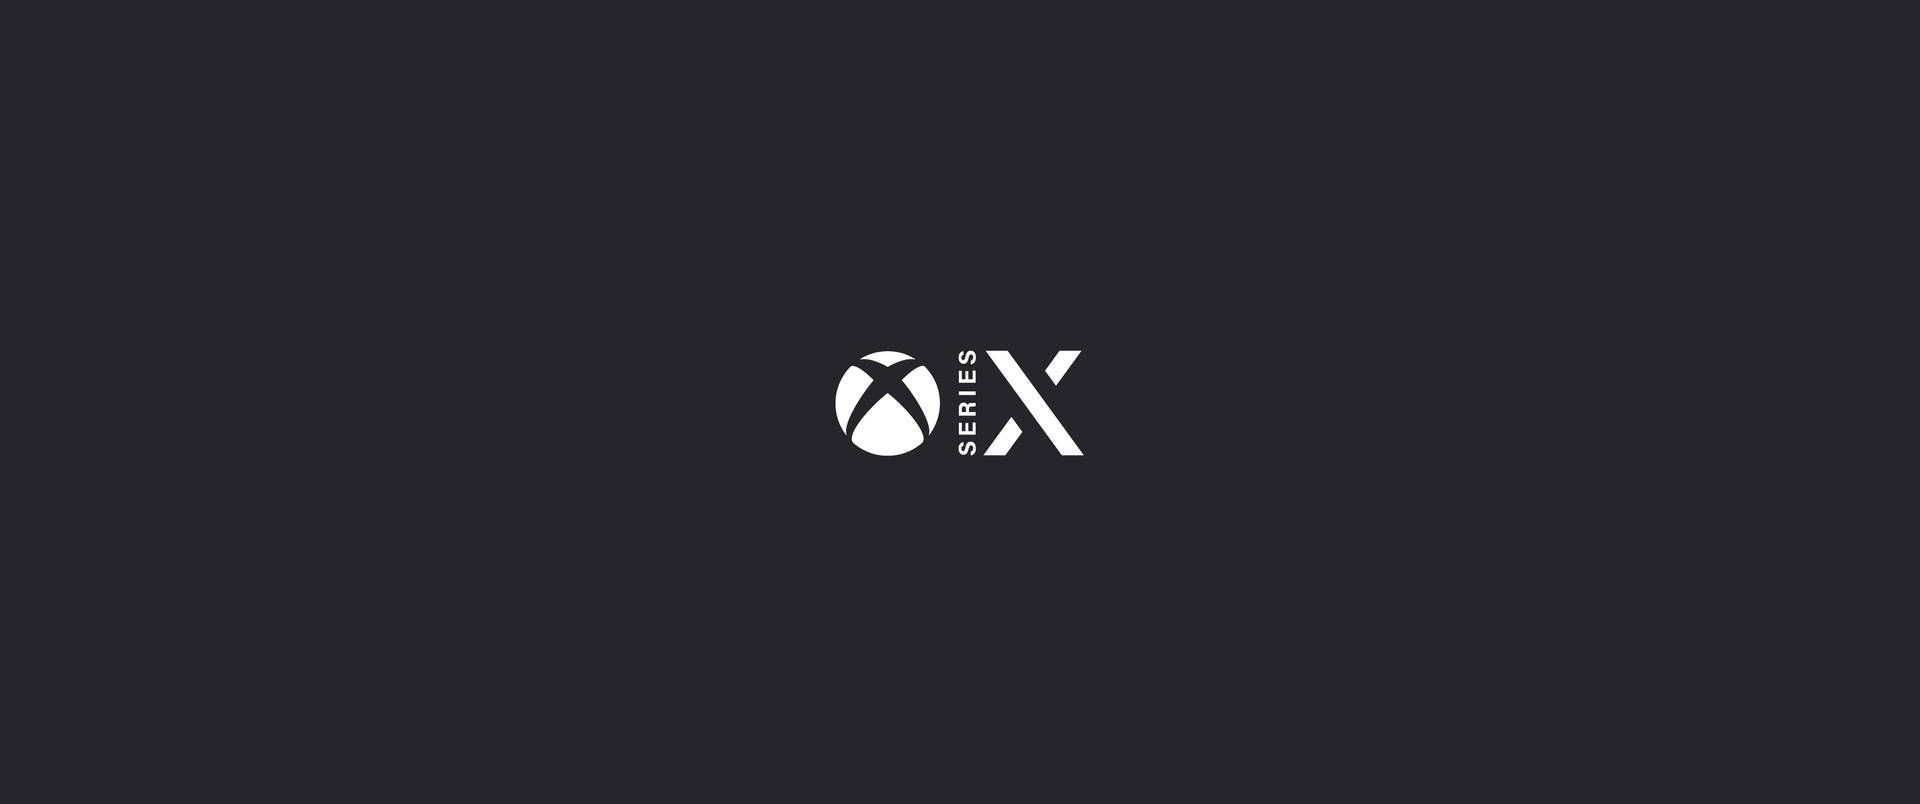 Xbox Series X Minimalist Dark Grey Background